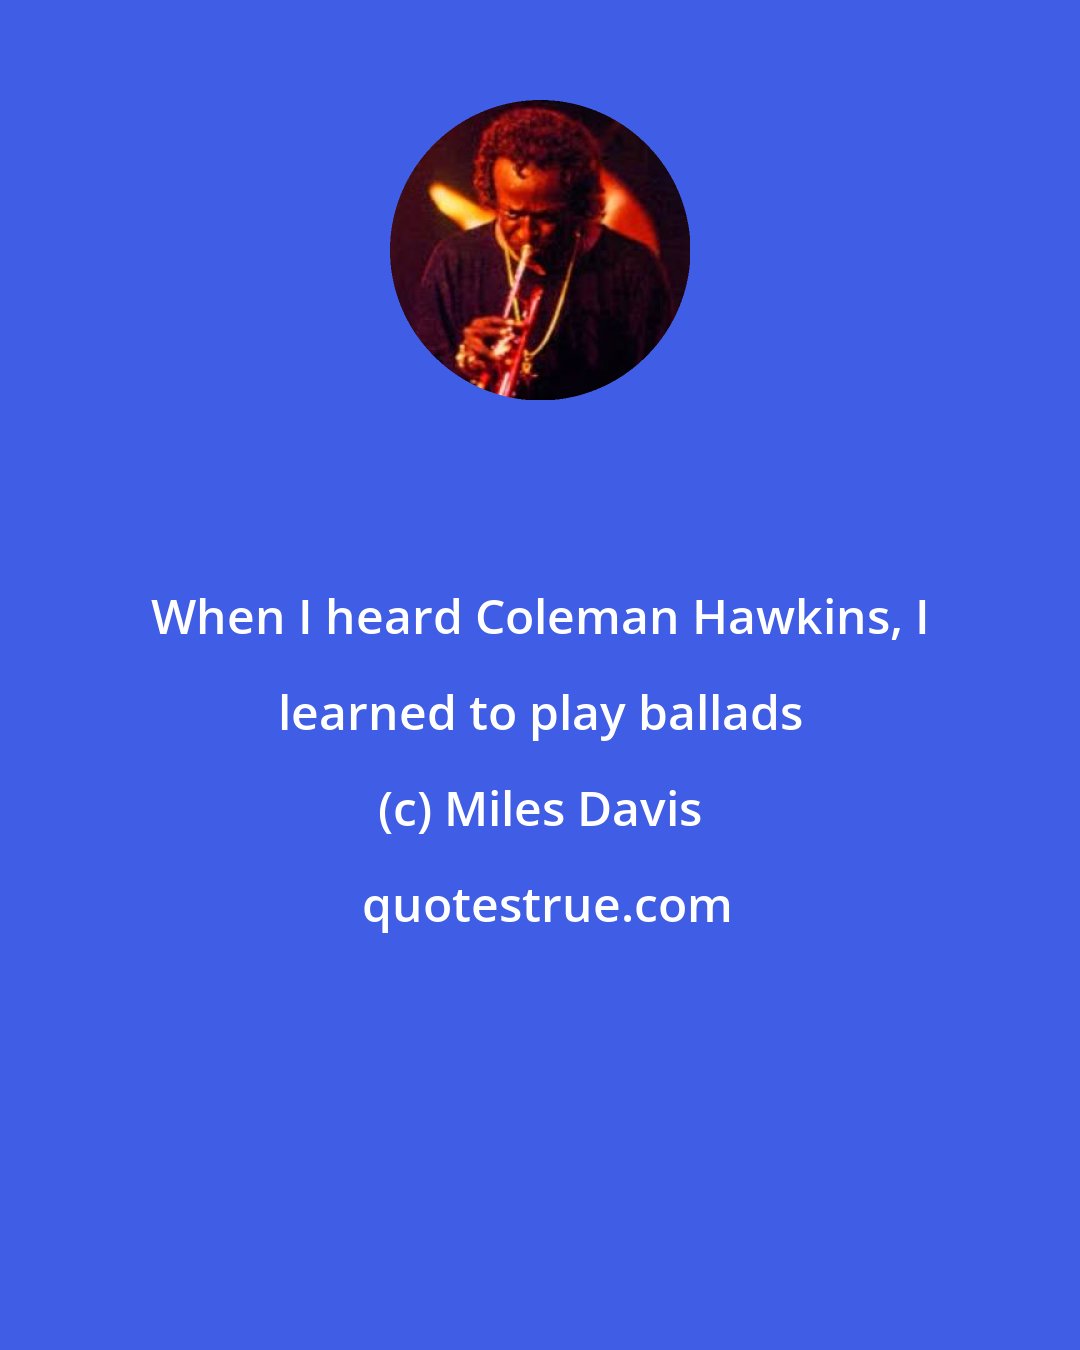 Miles Davis: When I heard Coleman Hawkins, I learned to play ballads